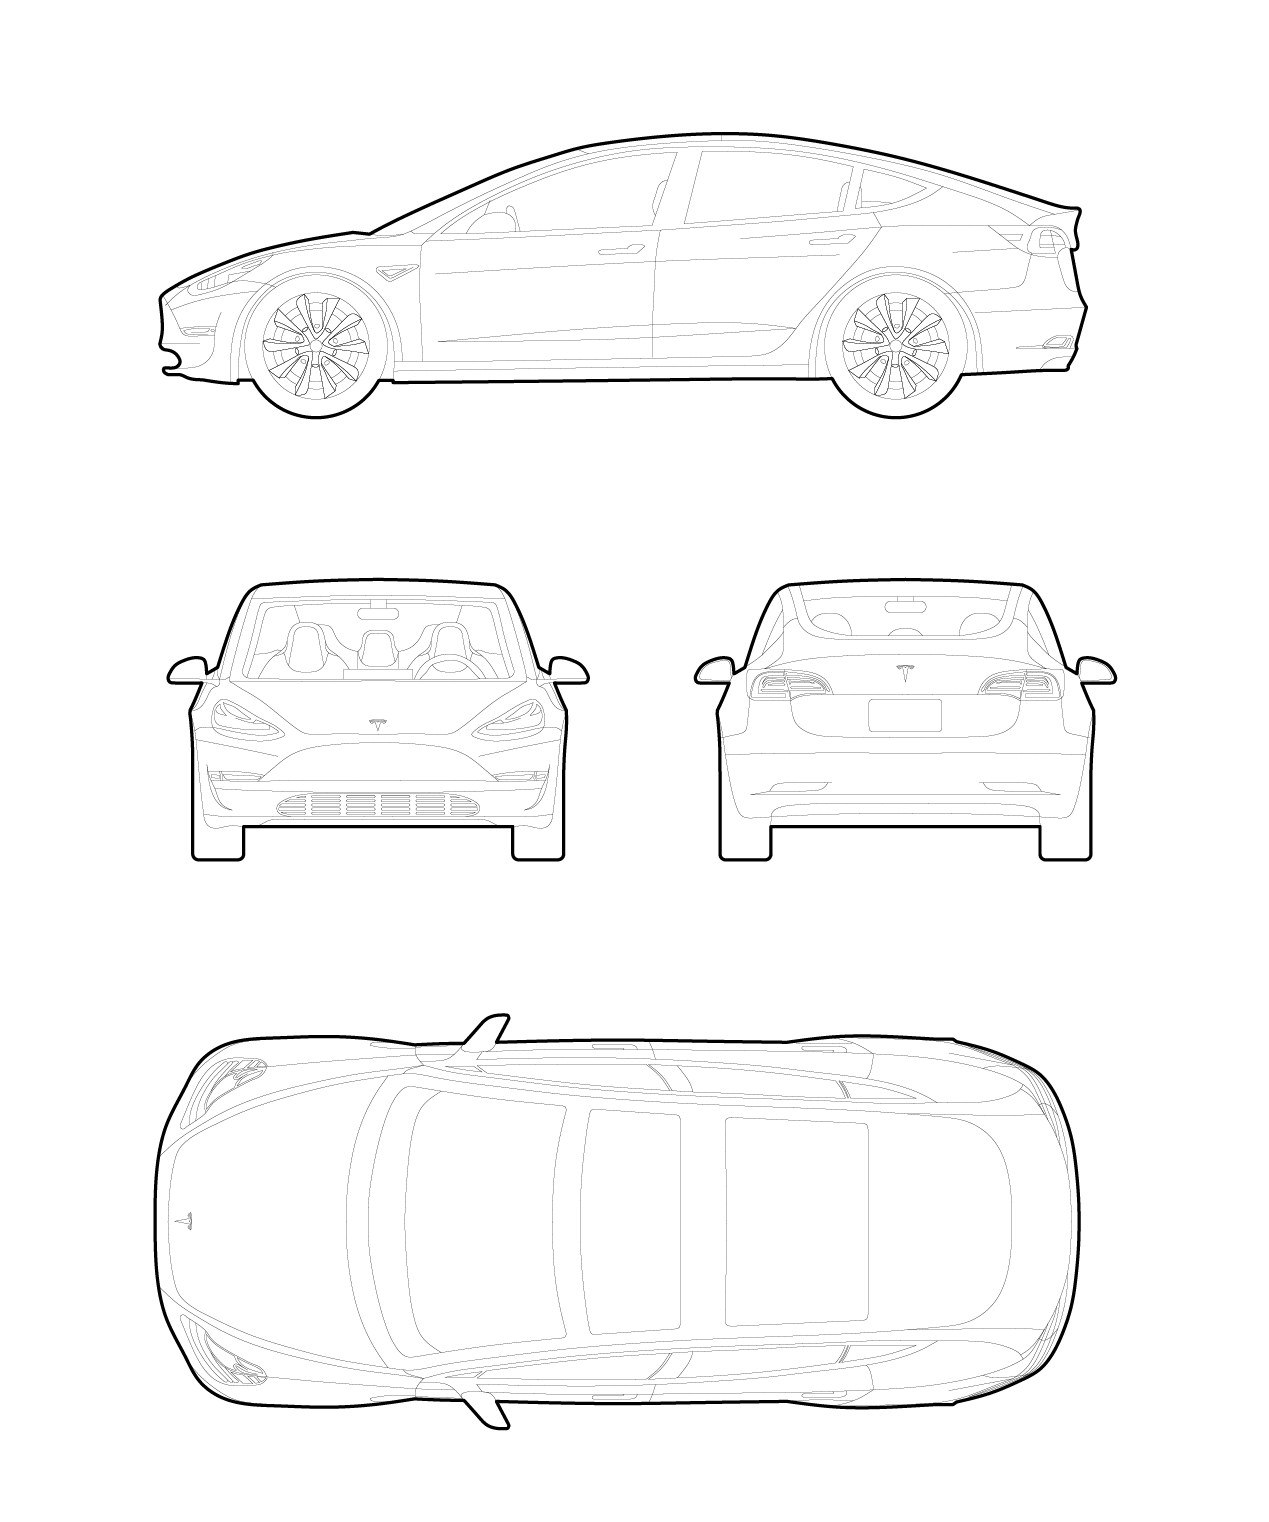 Drawing of a Tesla model 3 cad cars